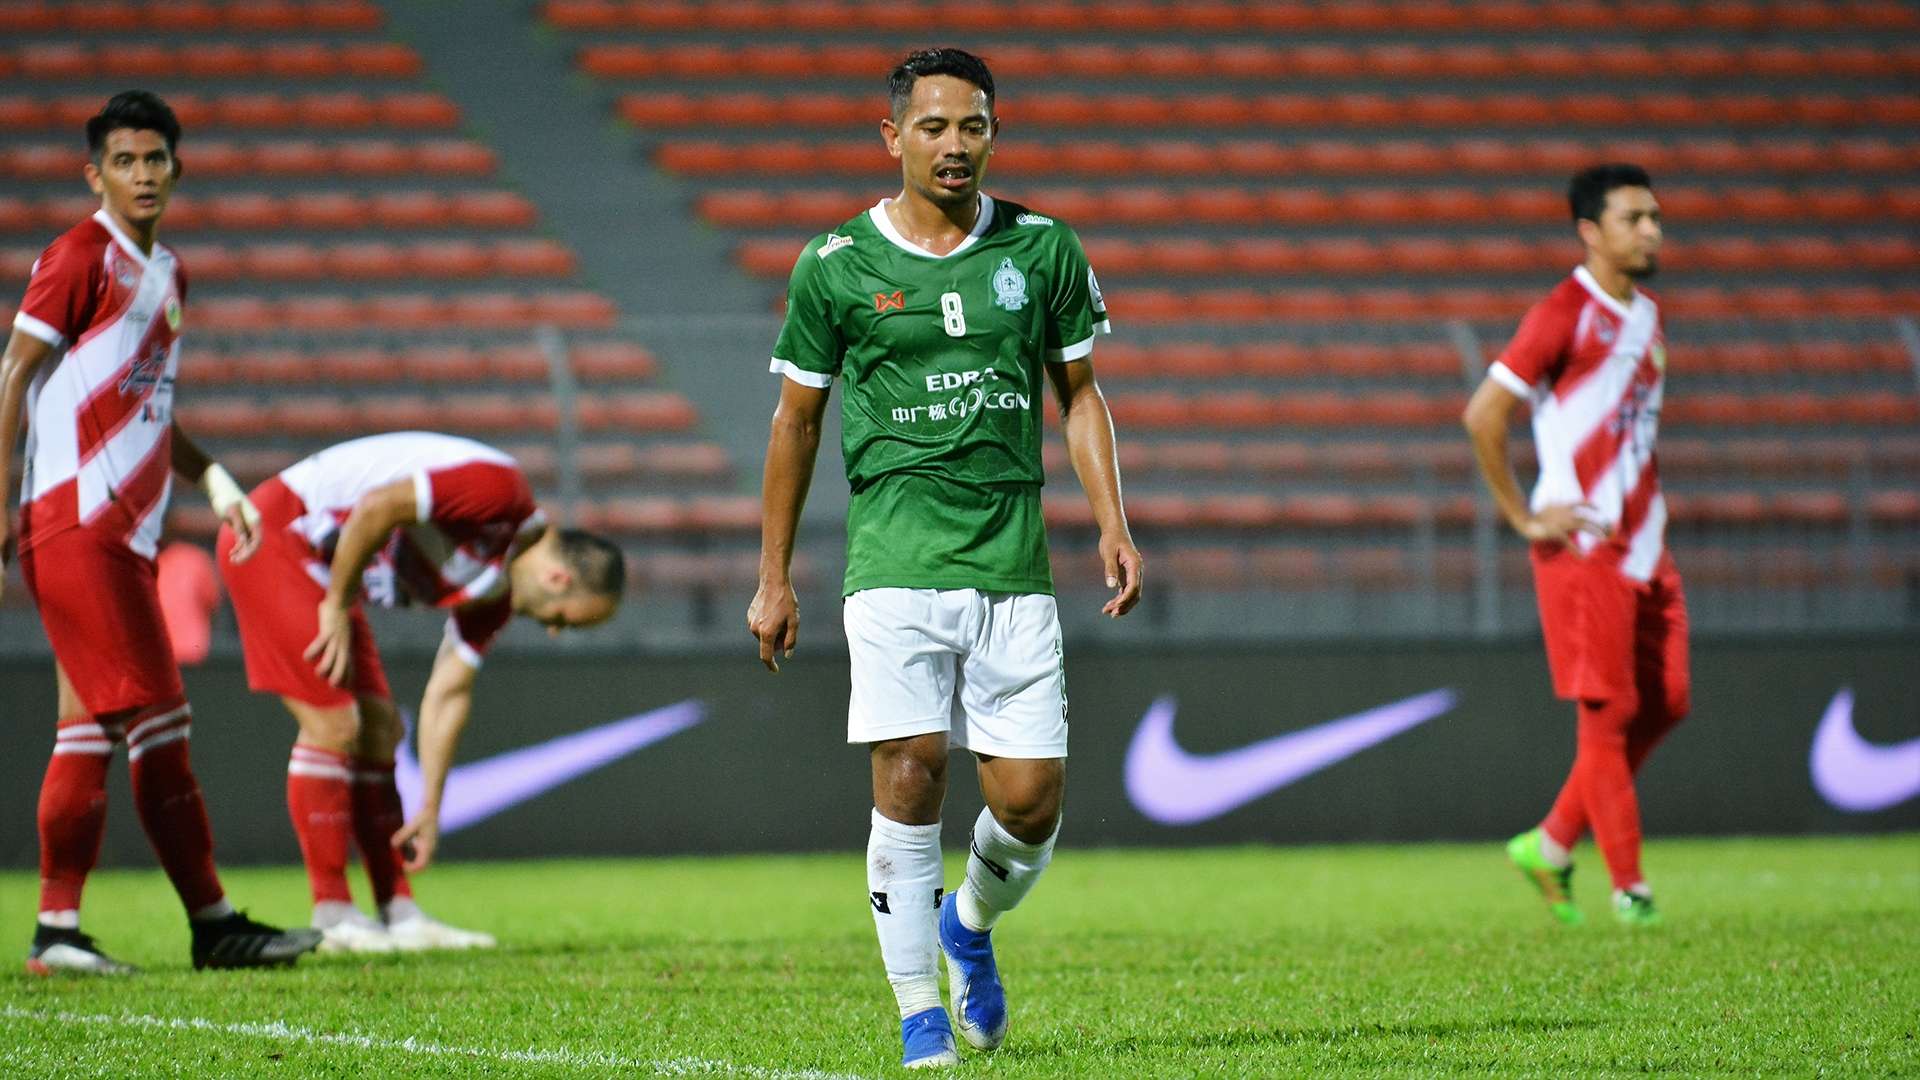 Safiq Rahim, Kuala Lumpur v Melaka, Malaysia Super League, 19 Jun 2019